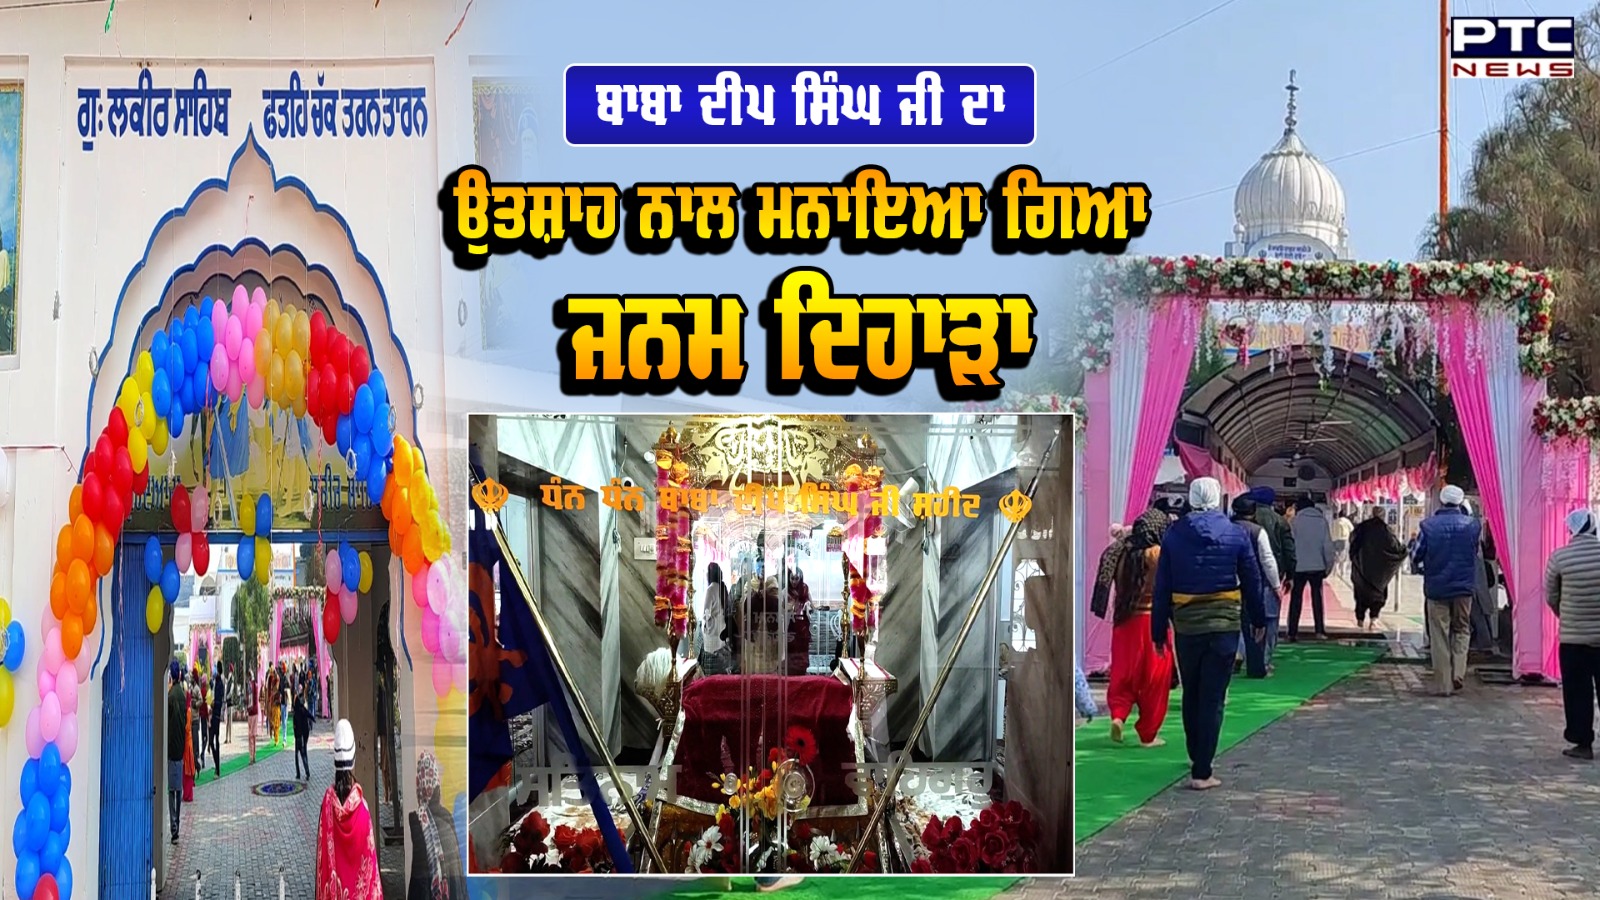 Tarn Taran: Baba Deep Singh Ji ਦਾ ਸ਼ਰਧਾ ਅਤੇ ਉਤਸ਼ਾਹ ਨਾਲ ਮਨਾਇਆ ਗਿਆ ਜਨਮ ਦਿਹਾੜਾ